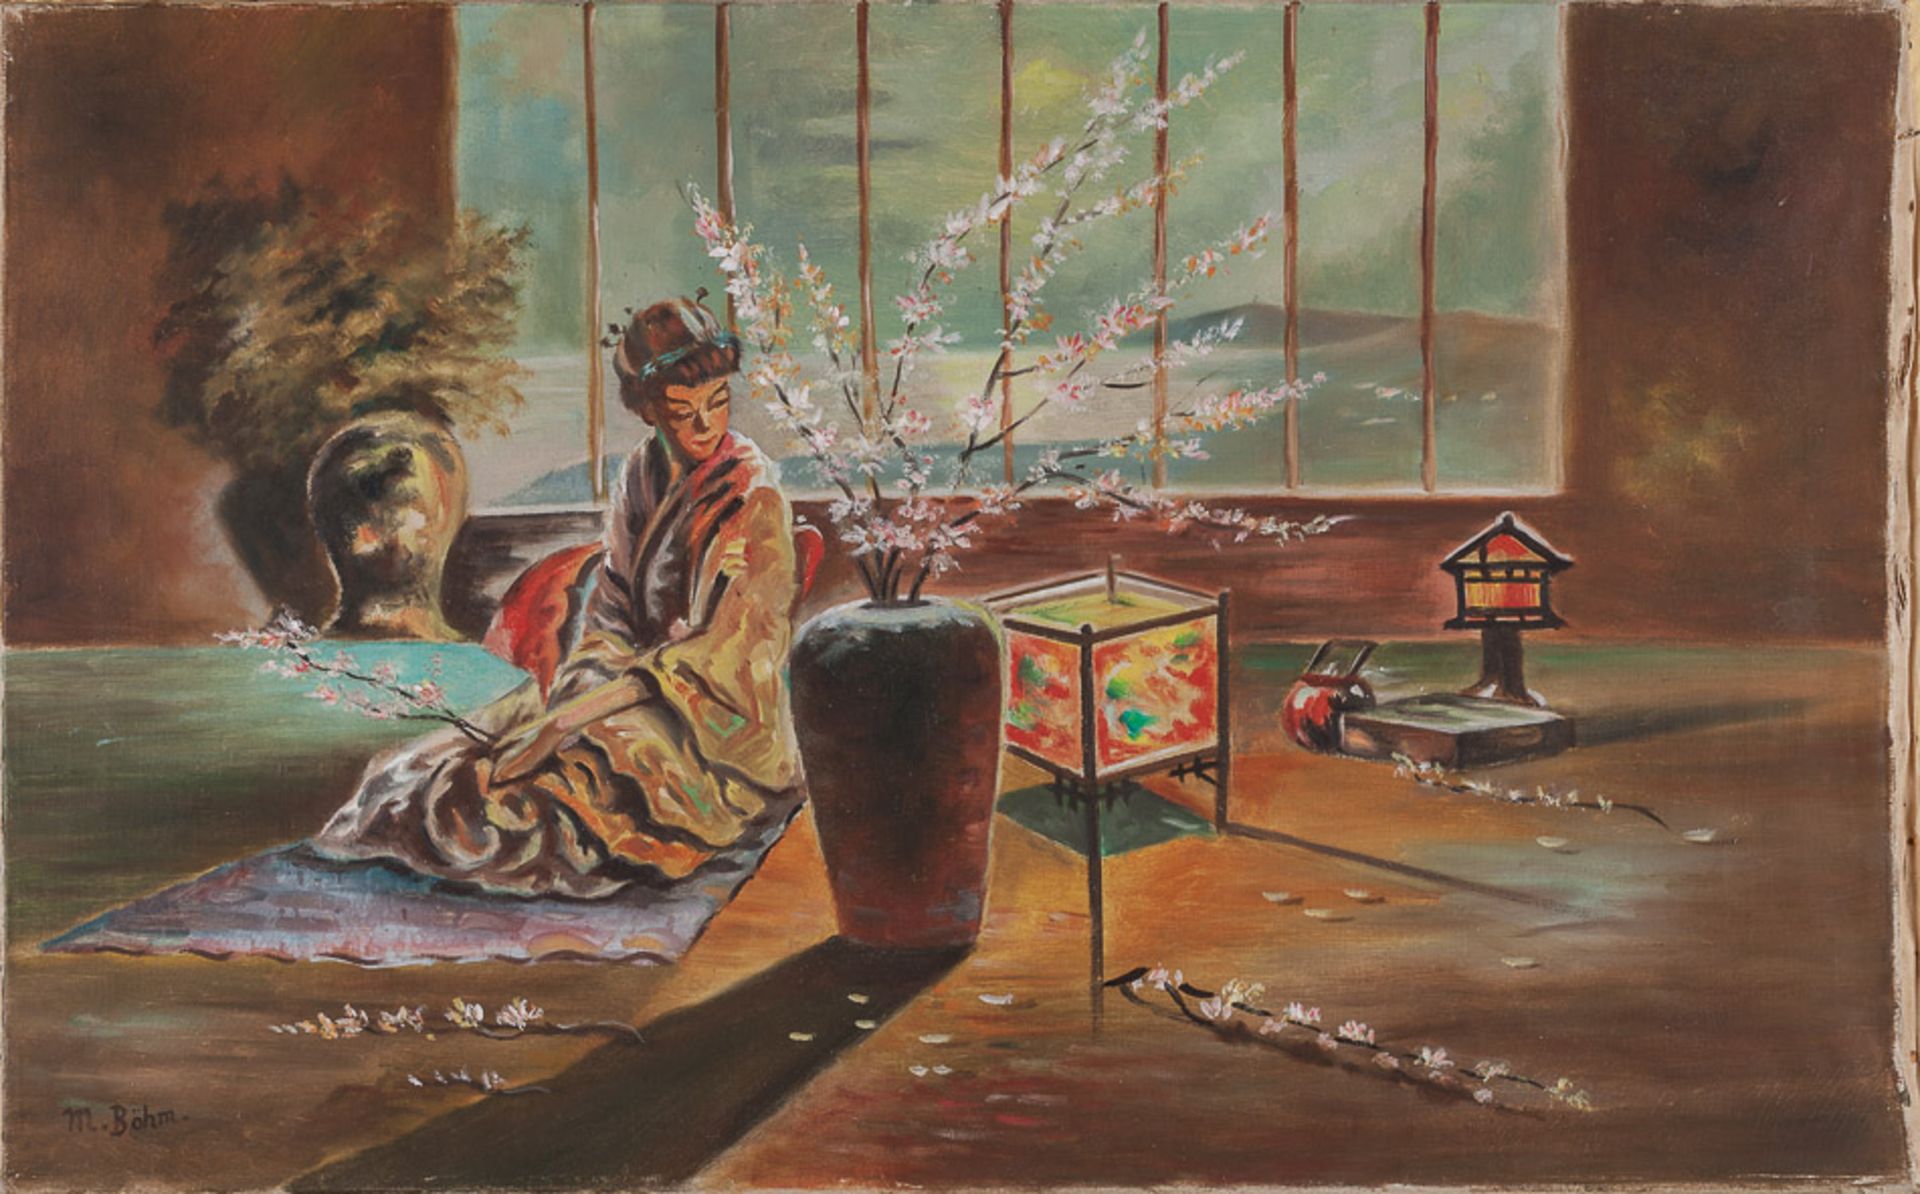 M.Böhm 20. Jhd."Geisha"
Gemälde Öl/Leinwand, 49,5 cm x 79,5 cm,
links unten signiert